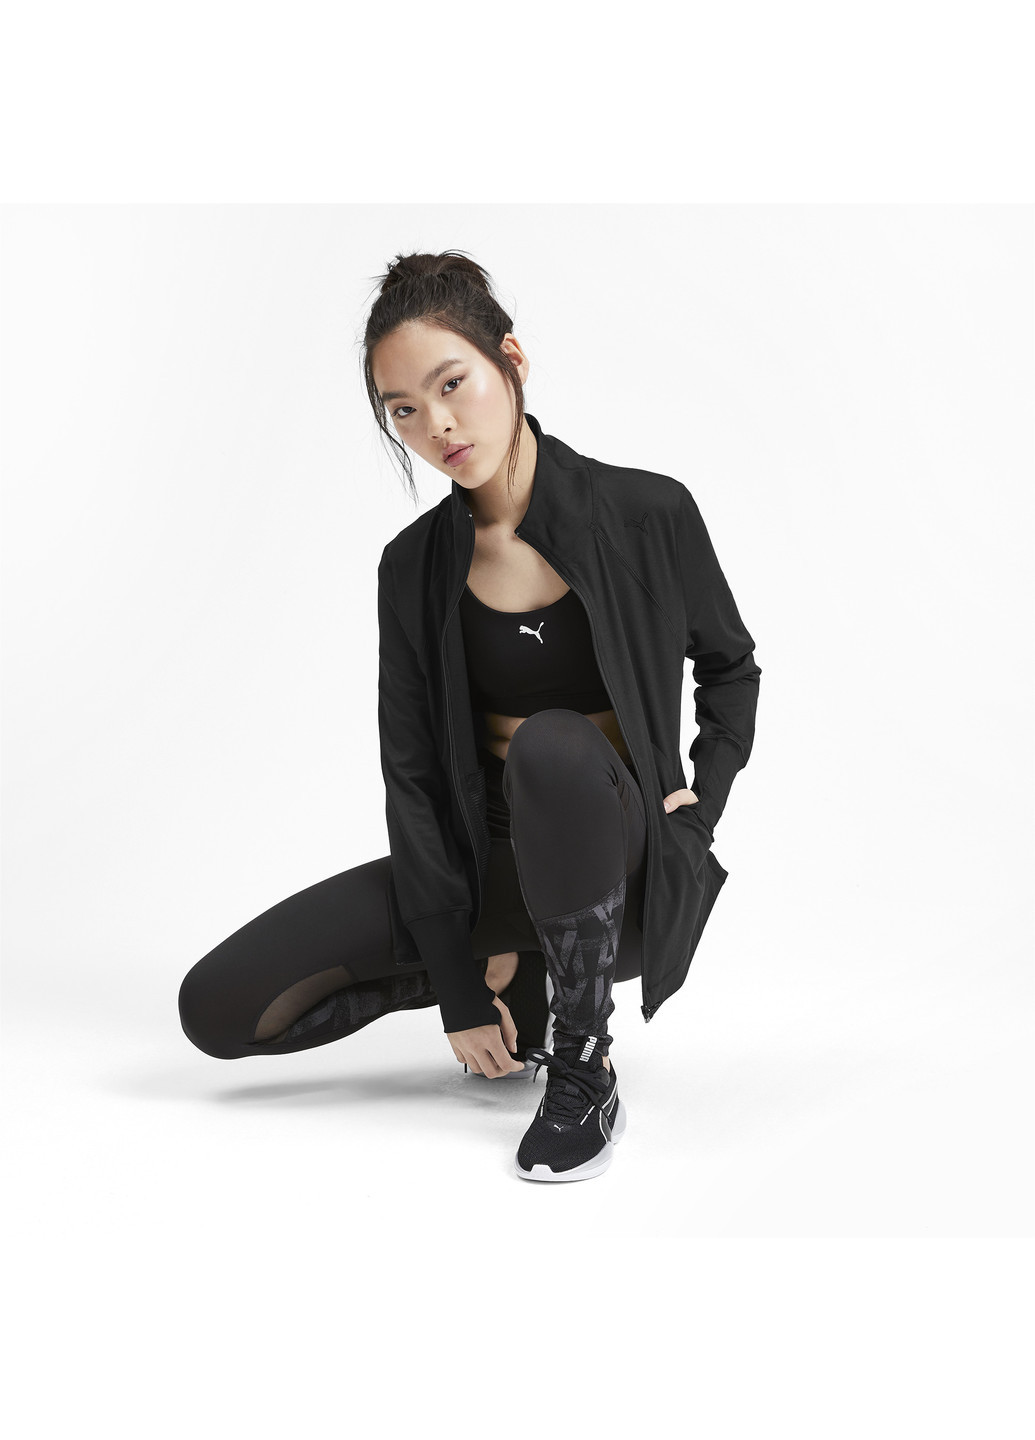 Олимпийка Studio Knit Jacket Puma чёрная спортивная полиэстер